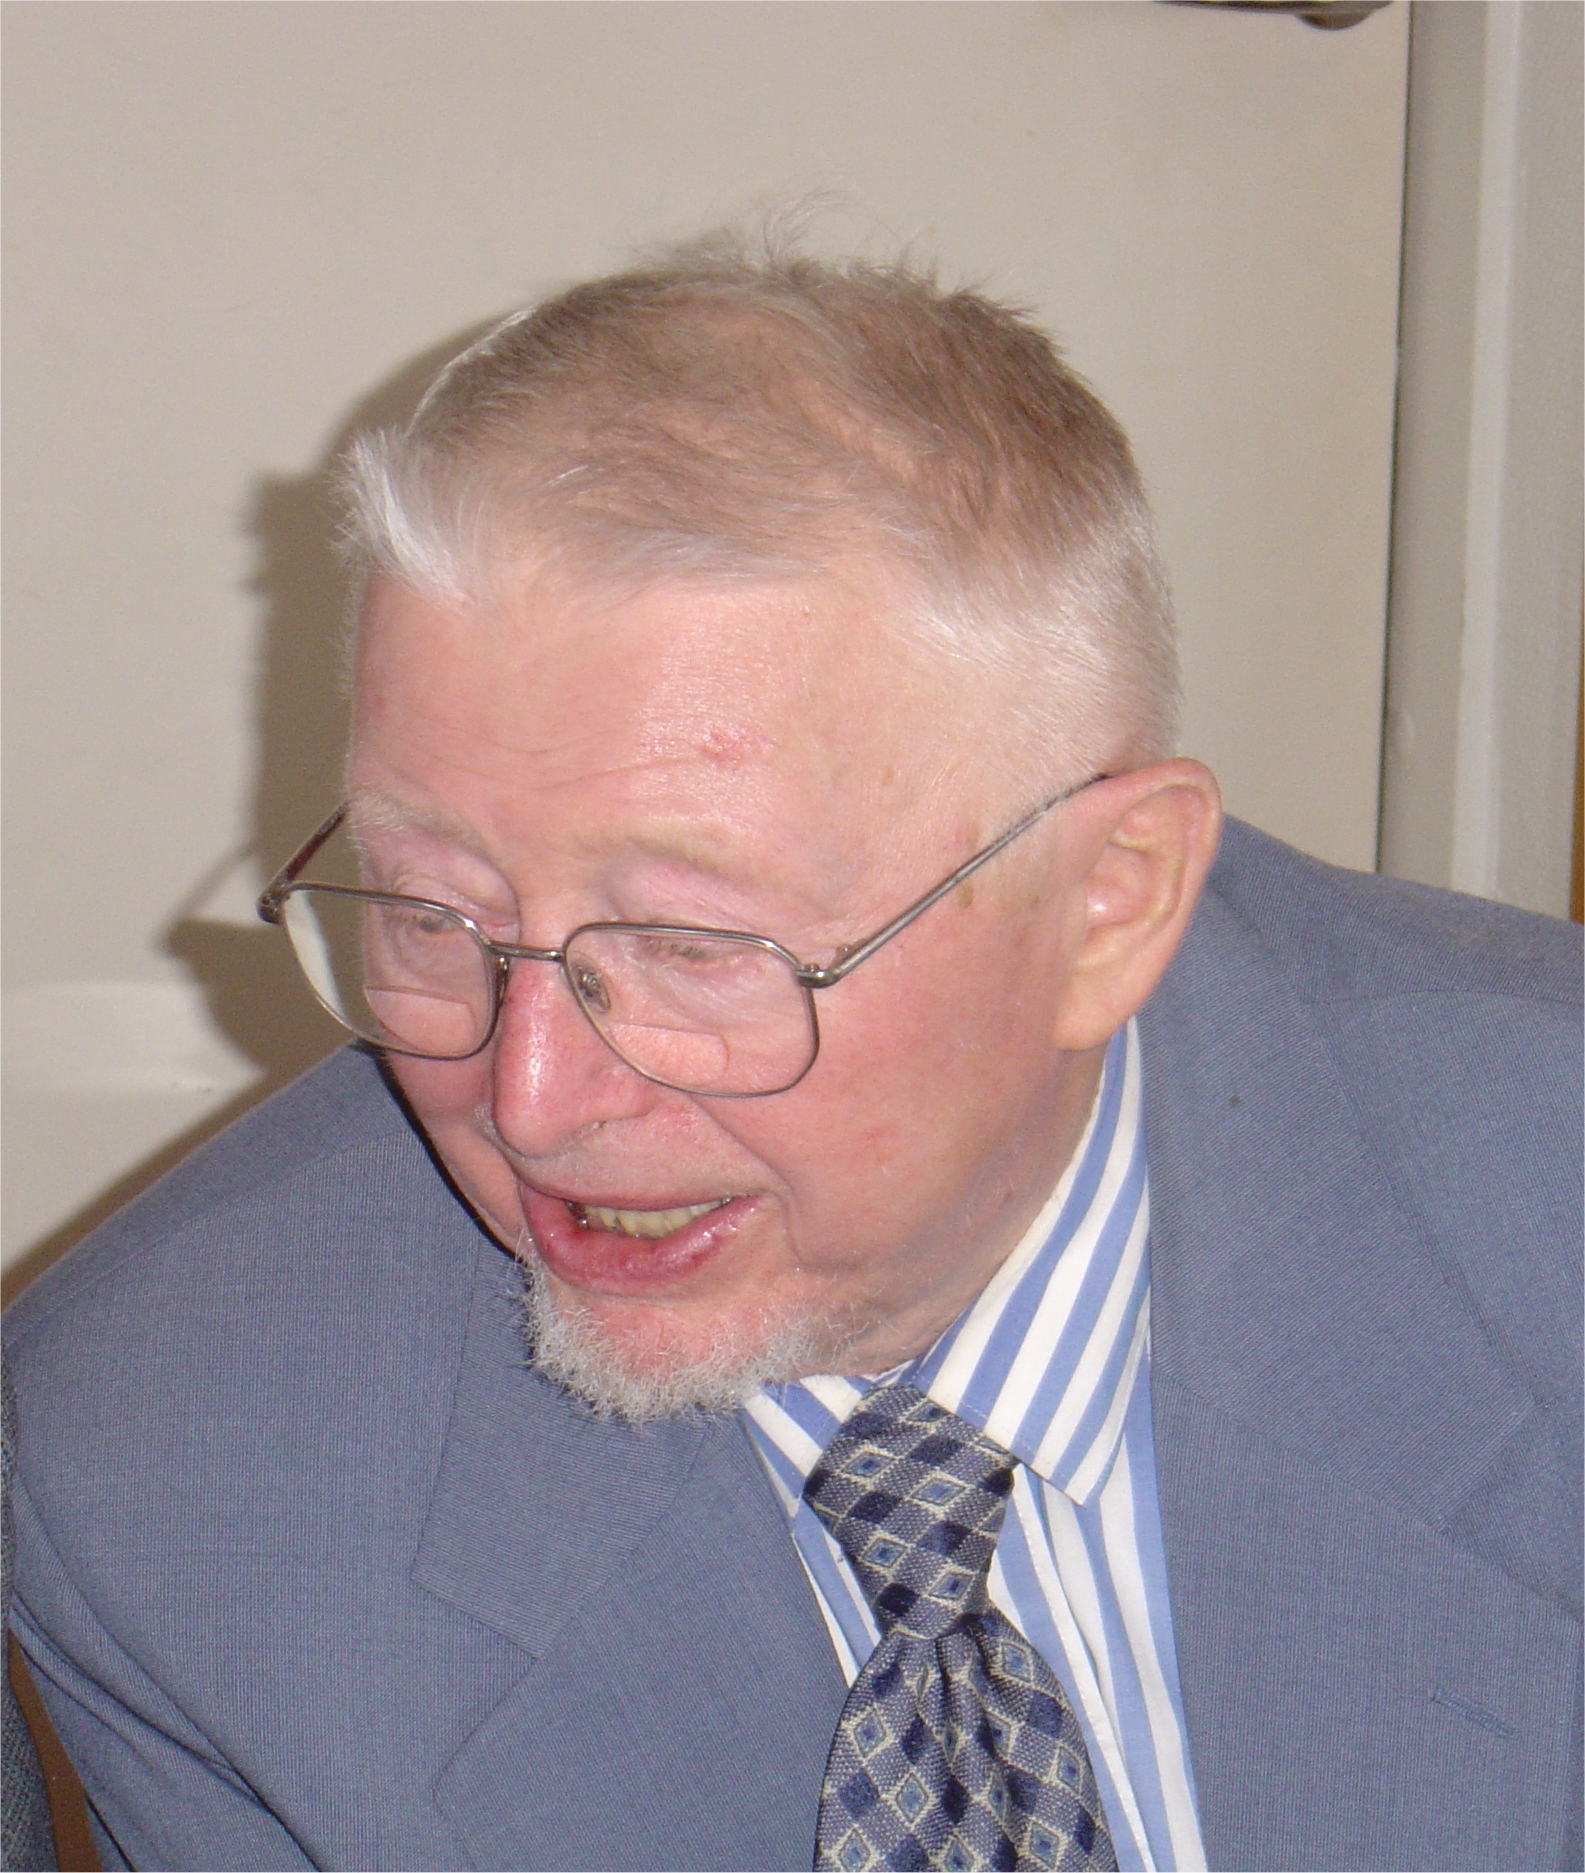 Peter Holger Knudsen